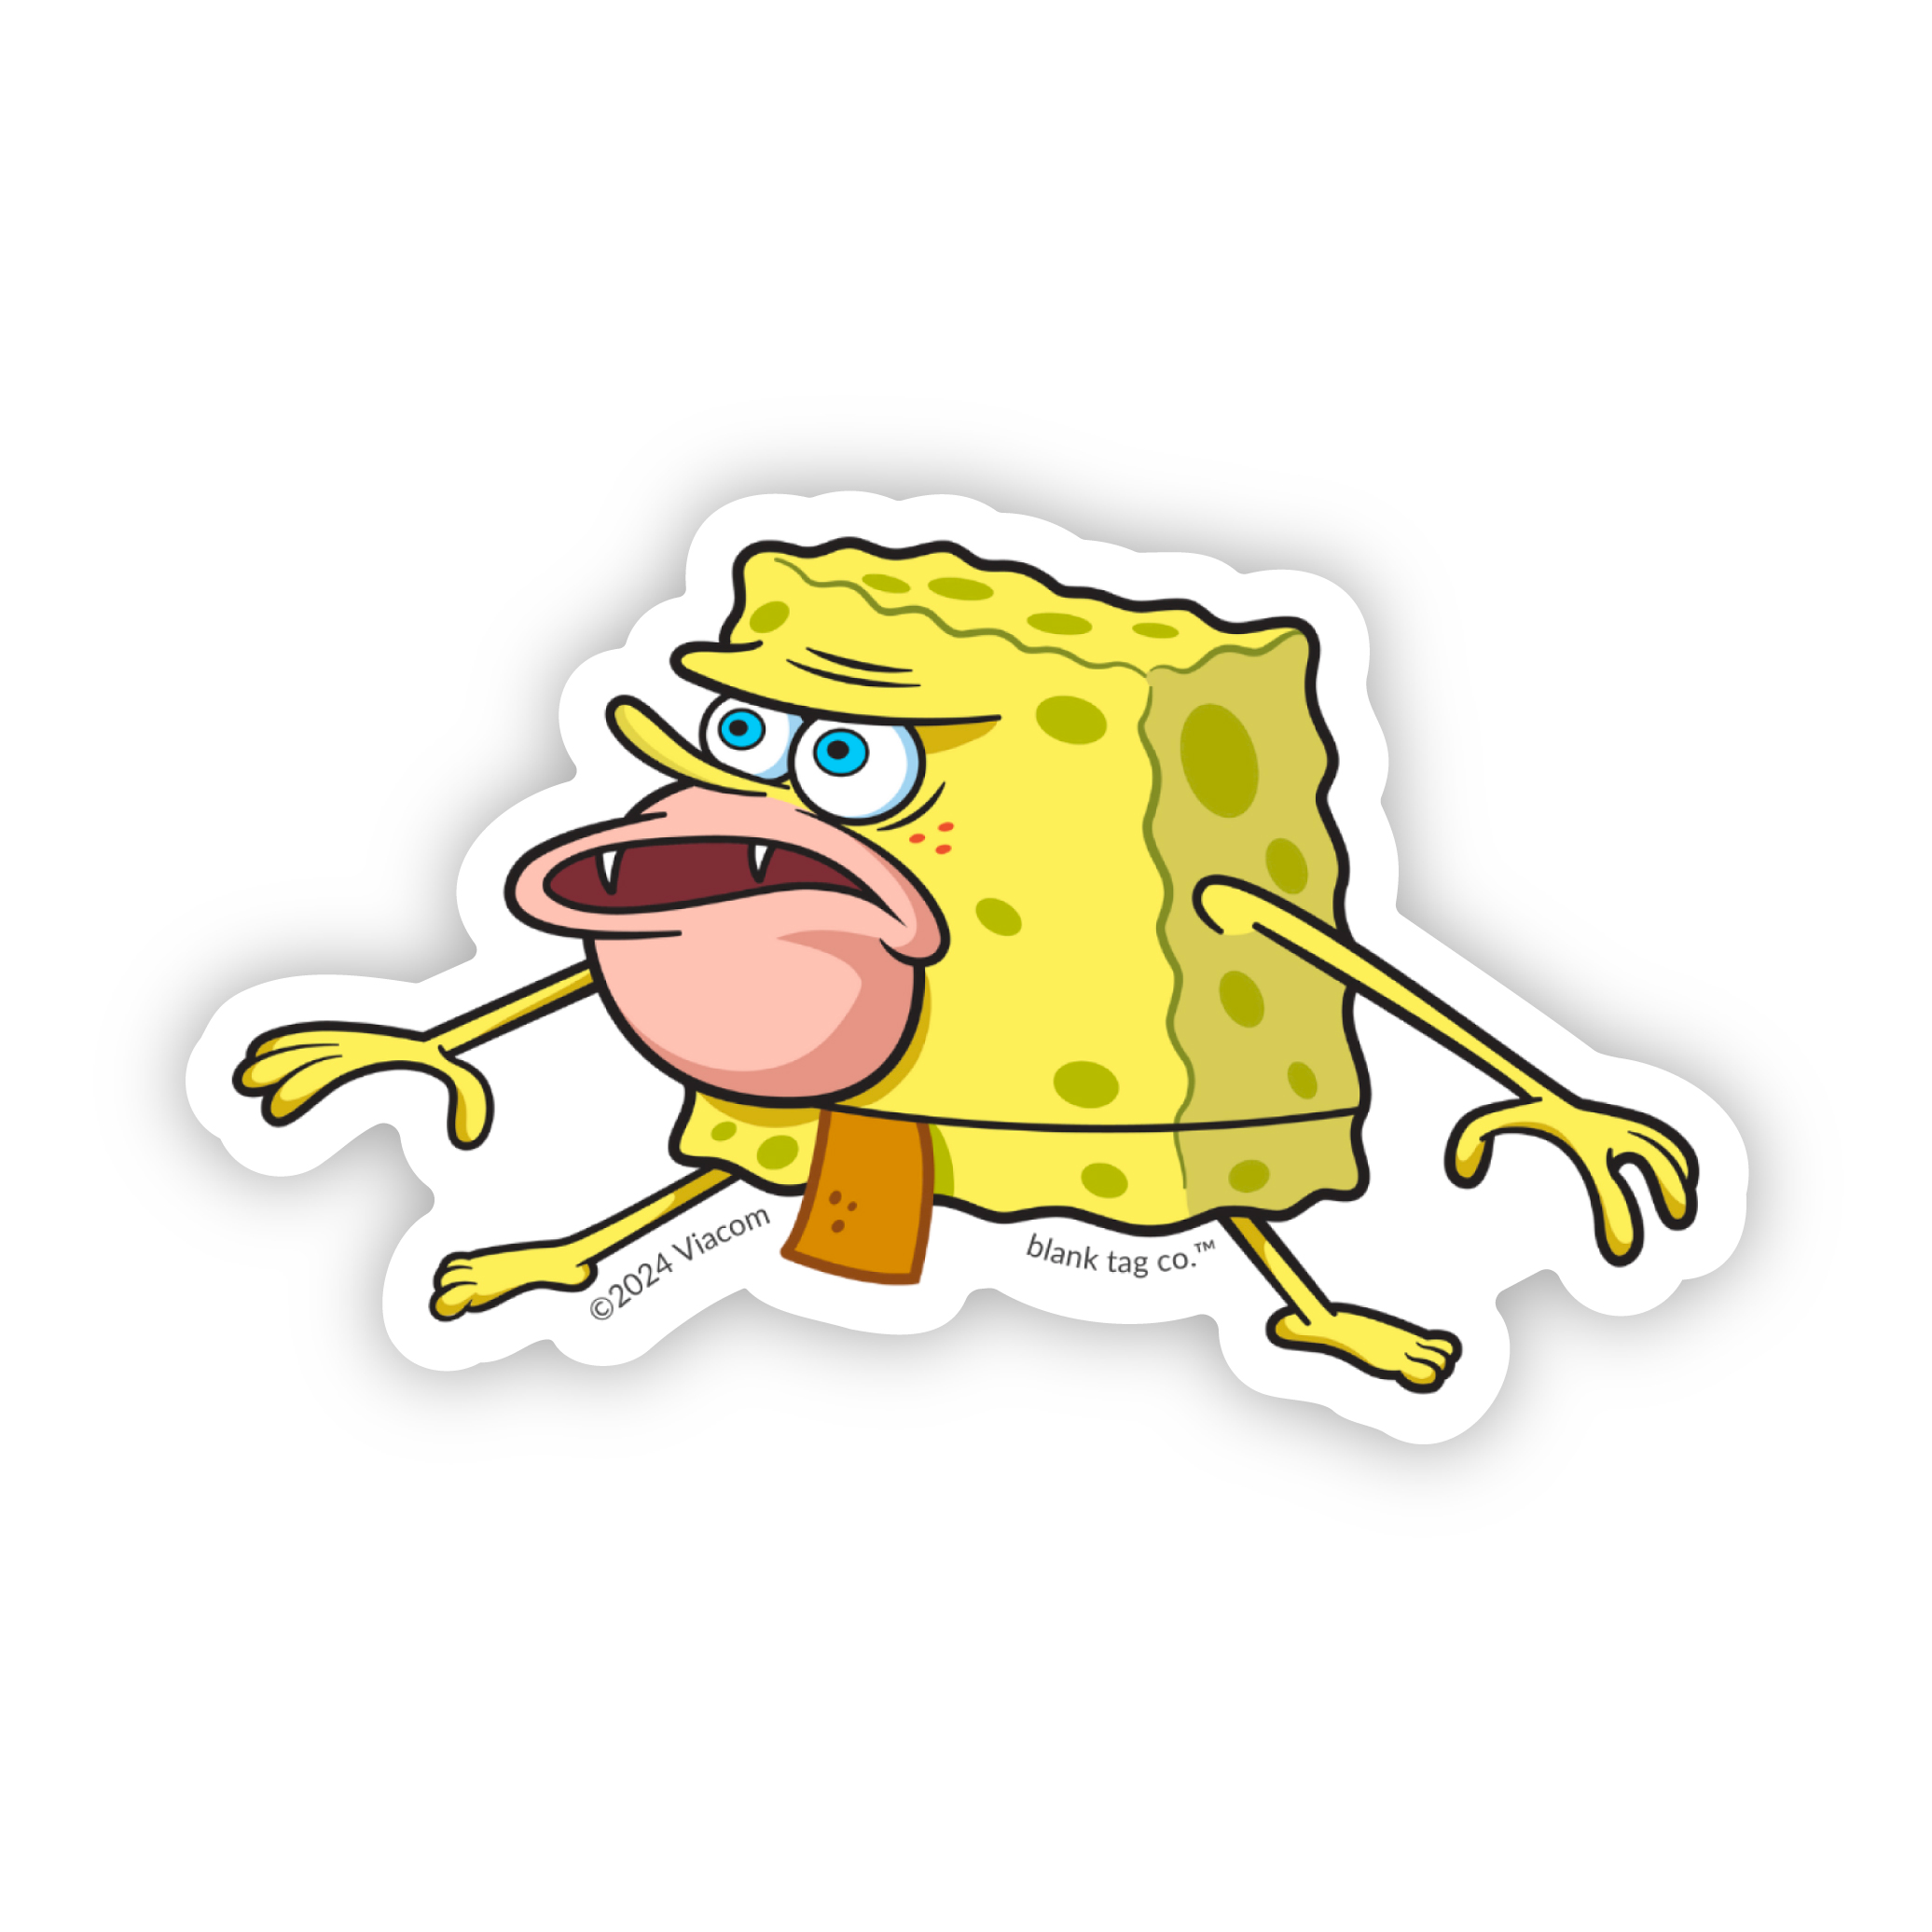 The Caveman SpongeBob Meme Sticker